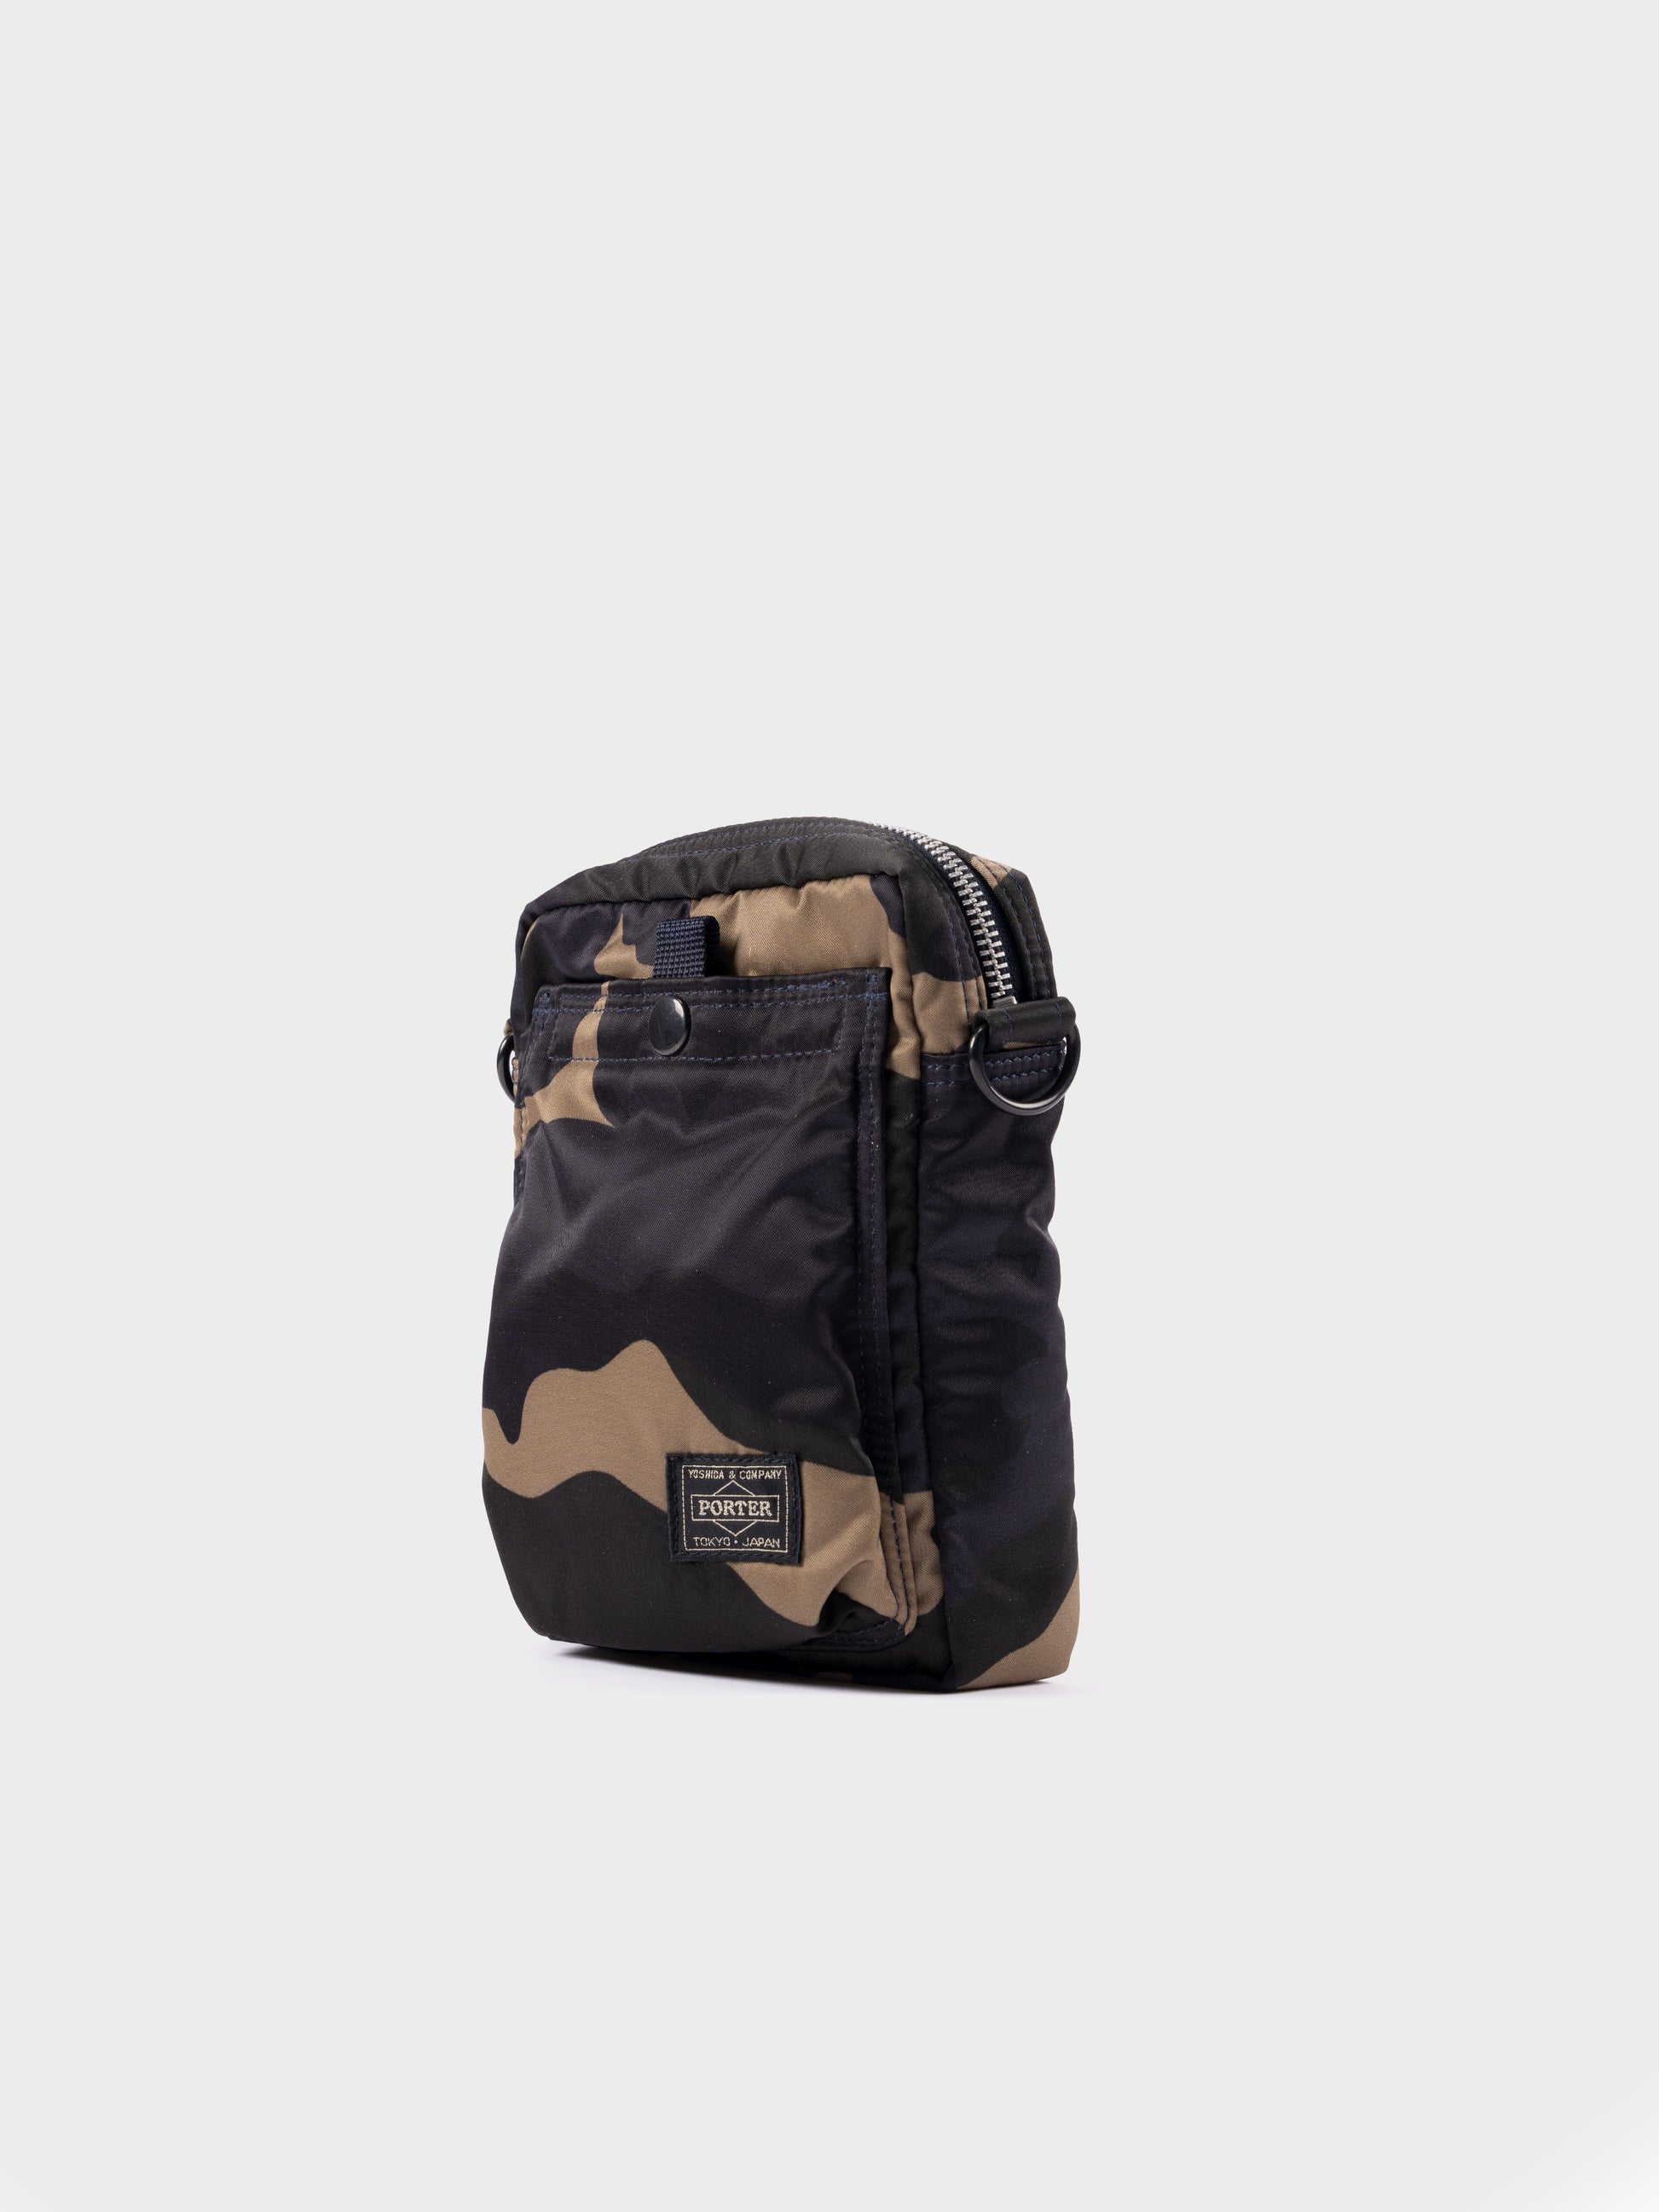 Porter-Yoshida & Co Counter Shade Vertical Shoulder Bag - Woodland Khaki